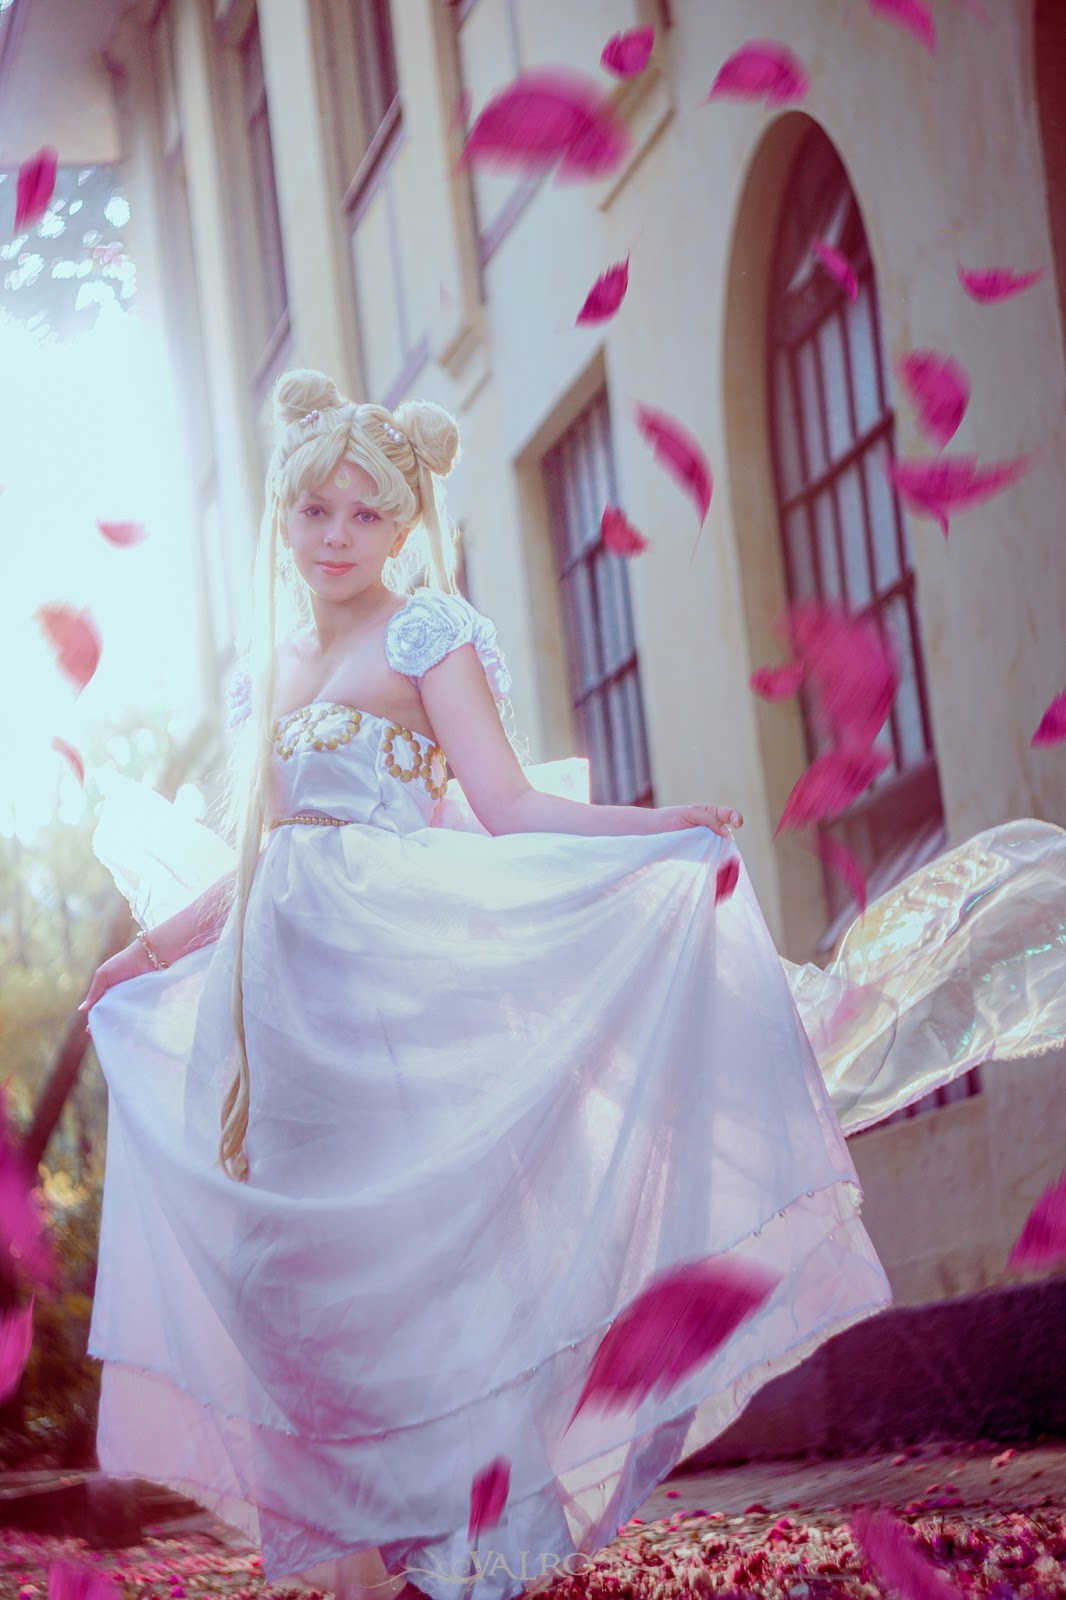 Veja um belo cosplay da Princesa Serenity, de Sailor Moon